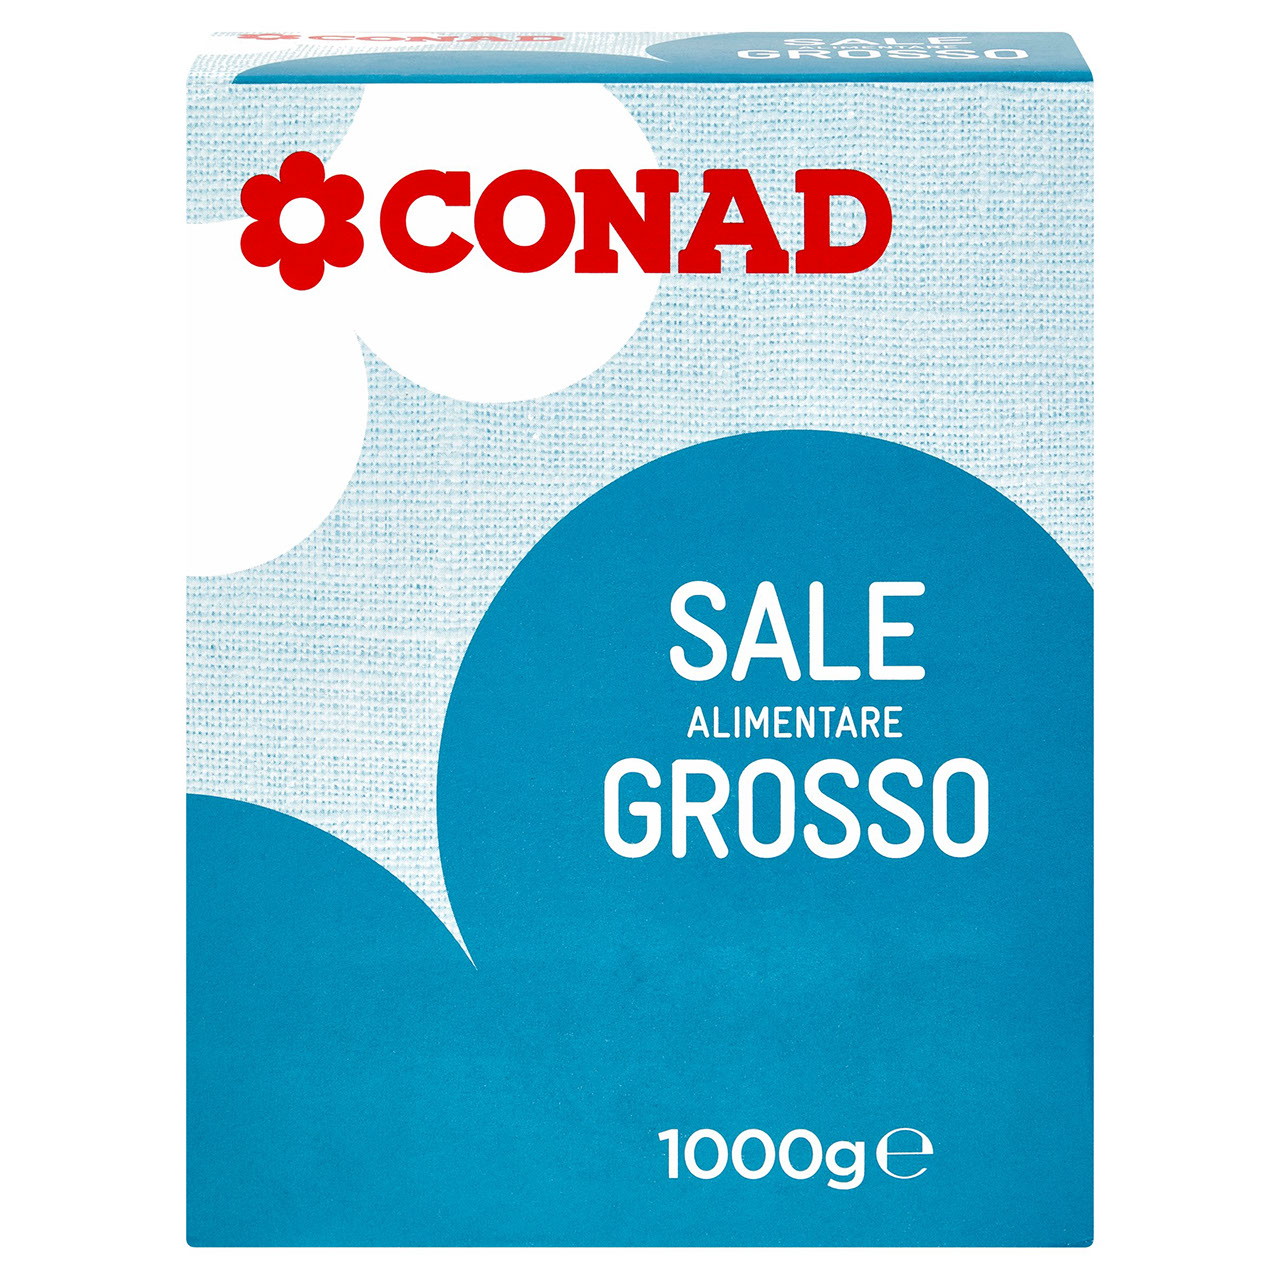 Sale Alimentare Grosso 1000g Conad online